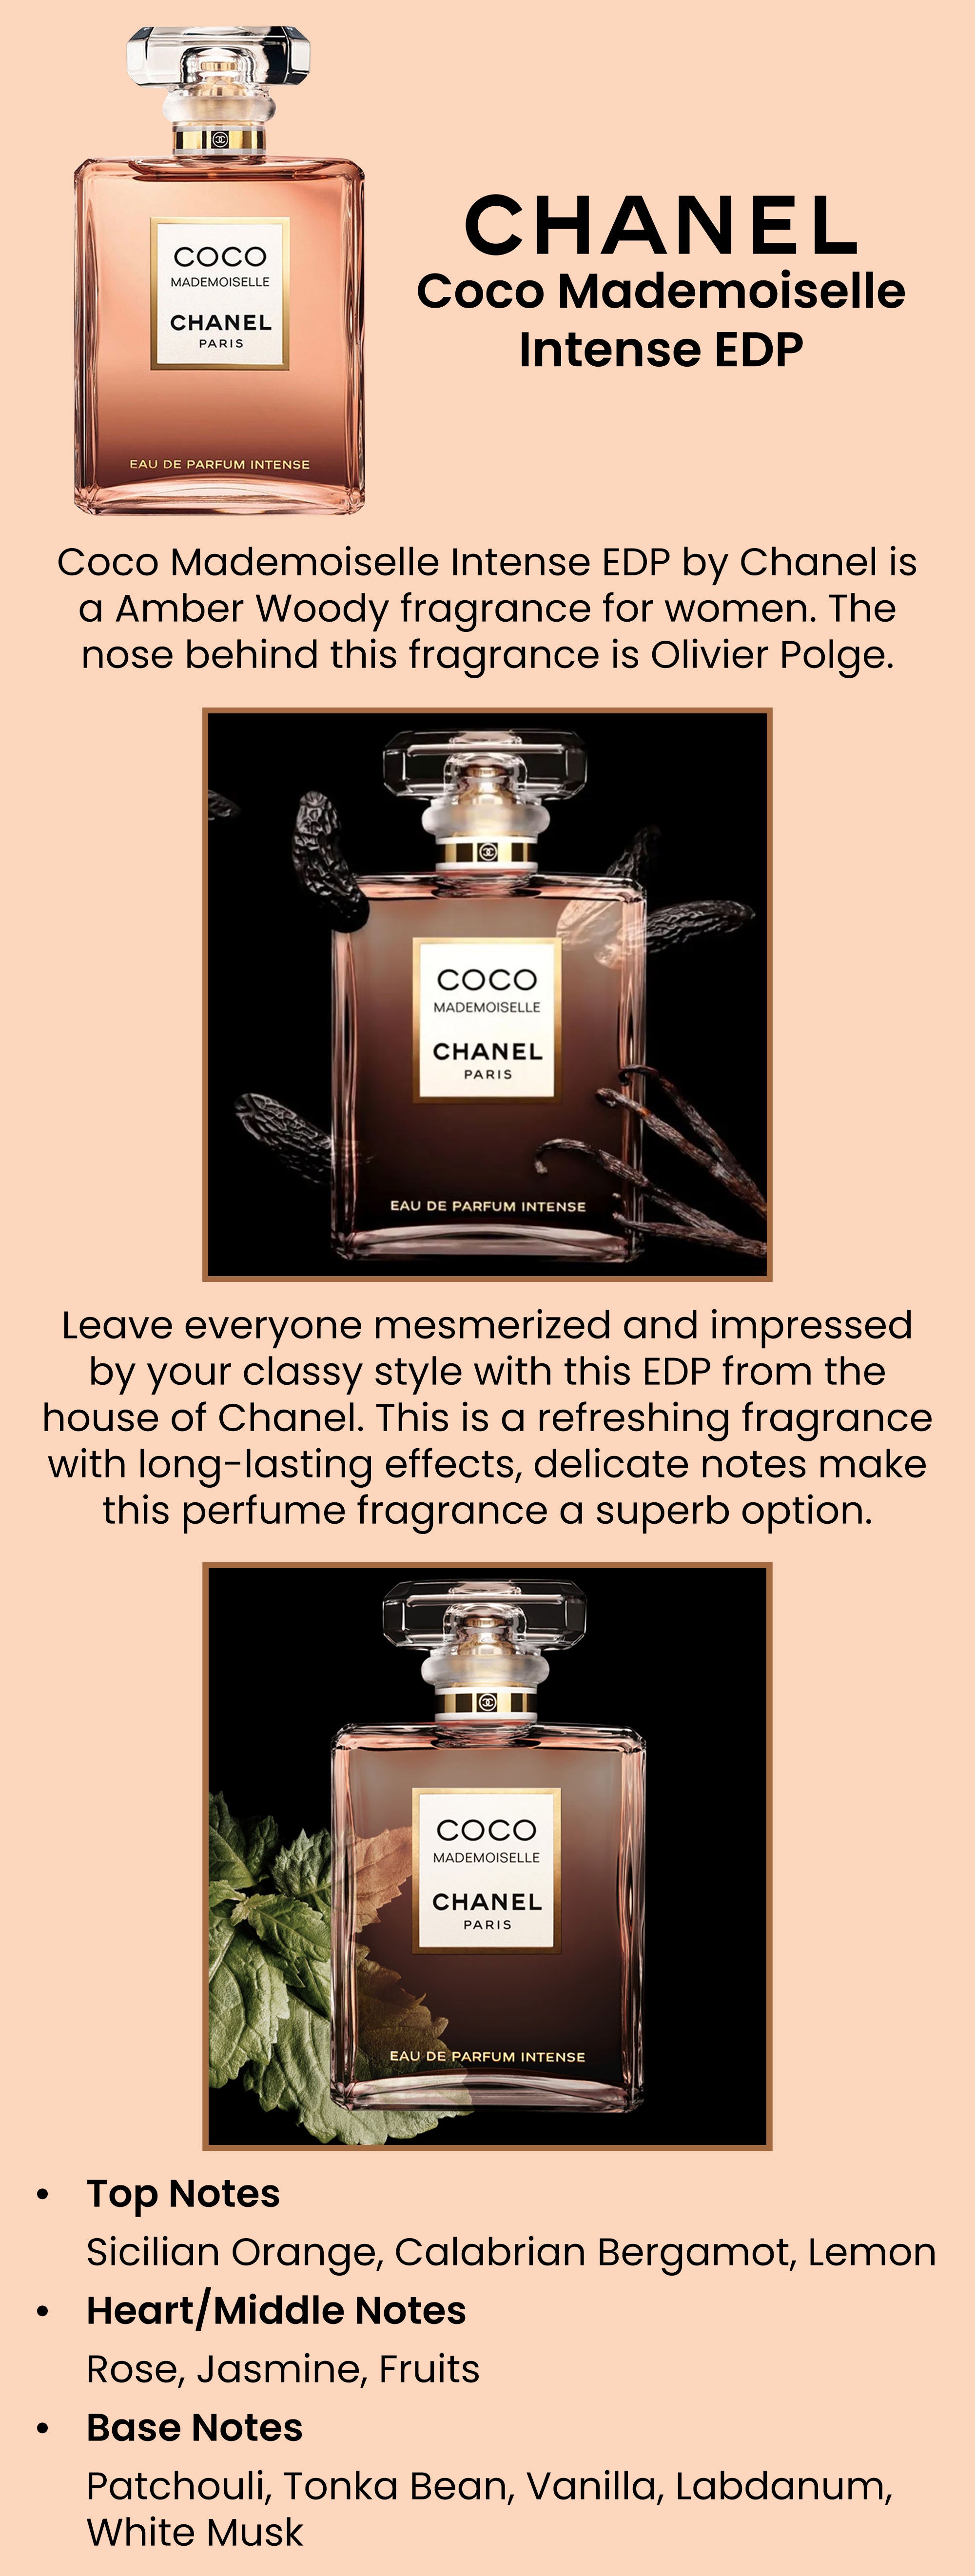 Chanel Coco Mademoiselle Intense Eau De Parfum Eshtir Com